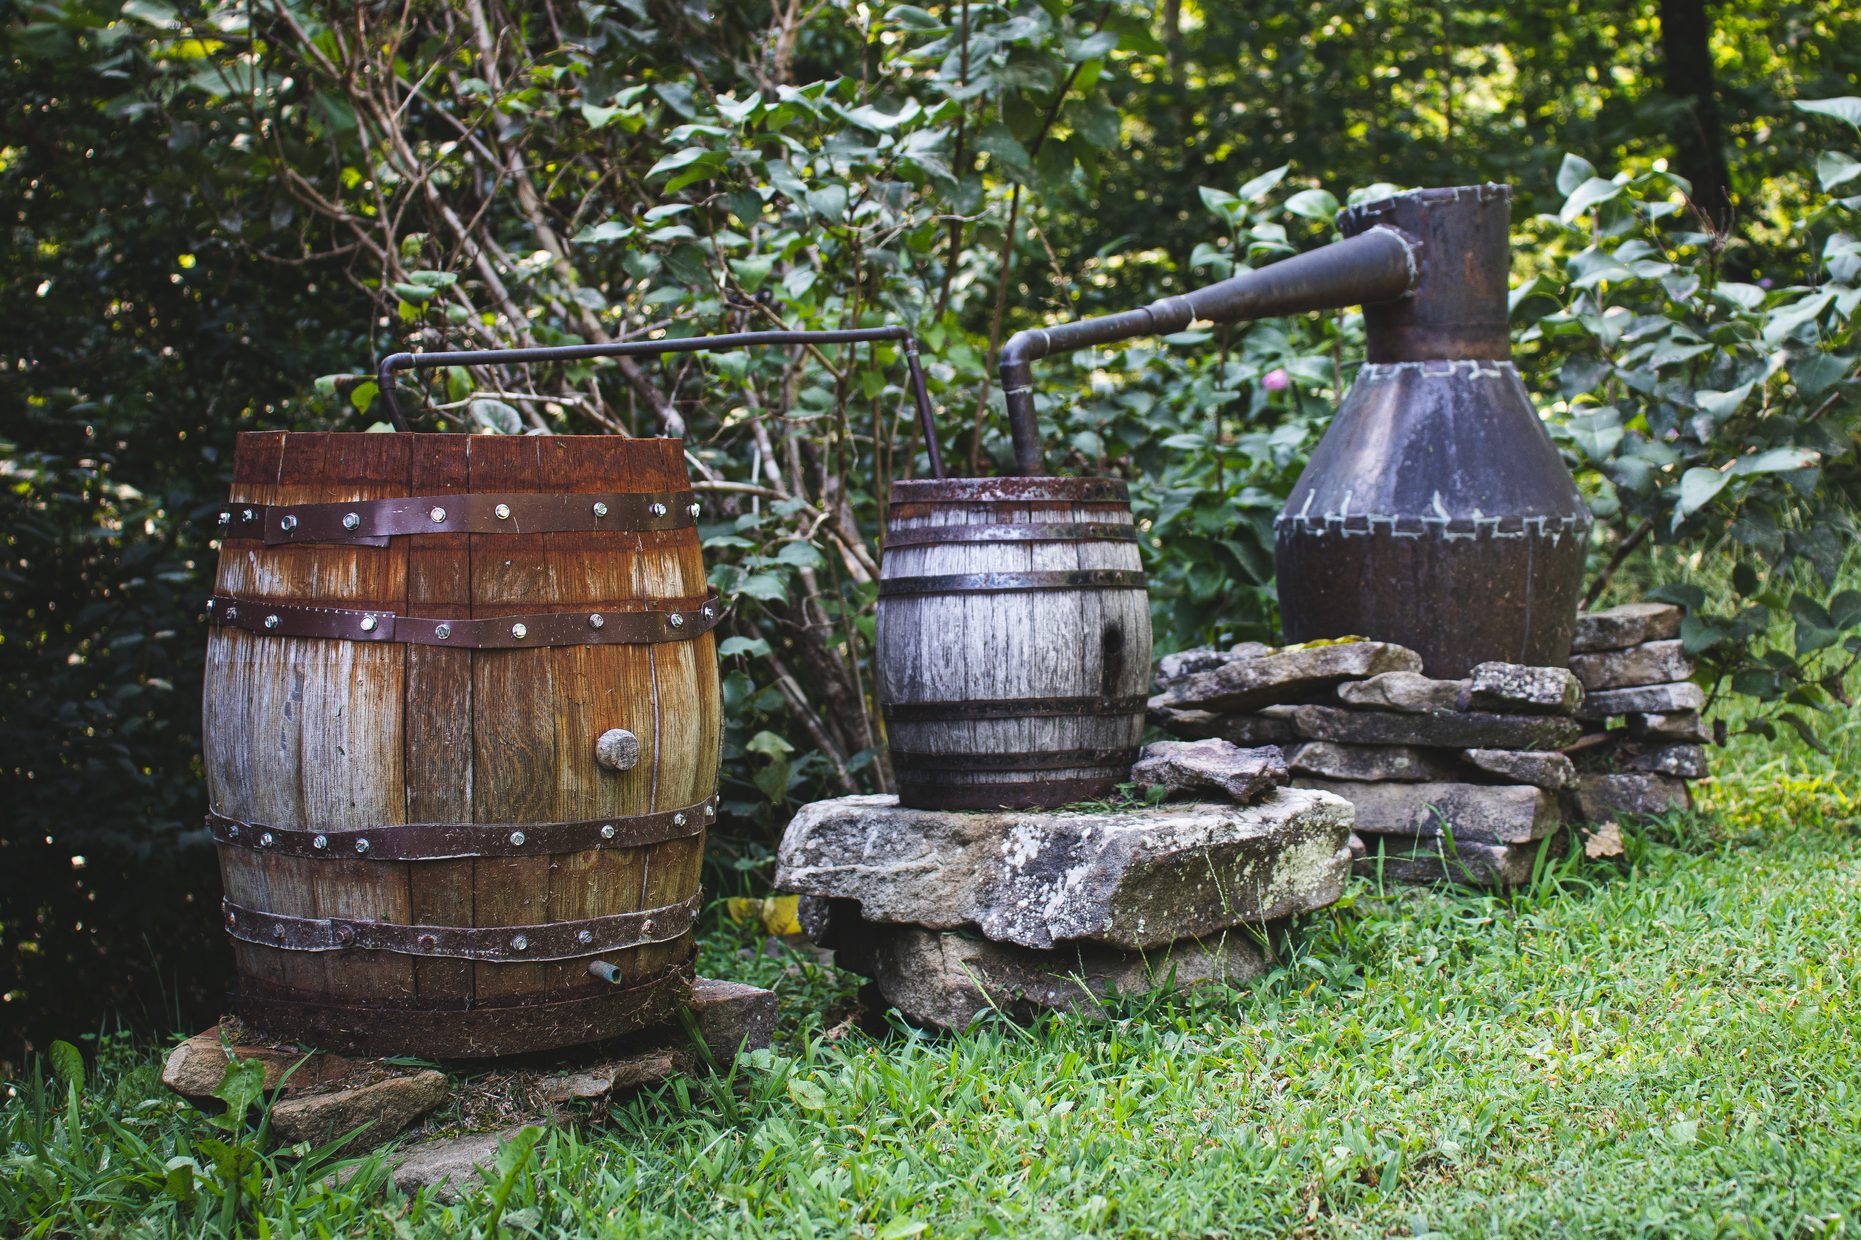 Moonshine distillery in backyard